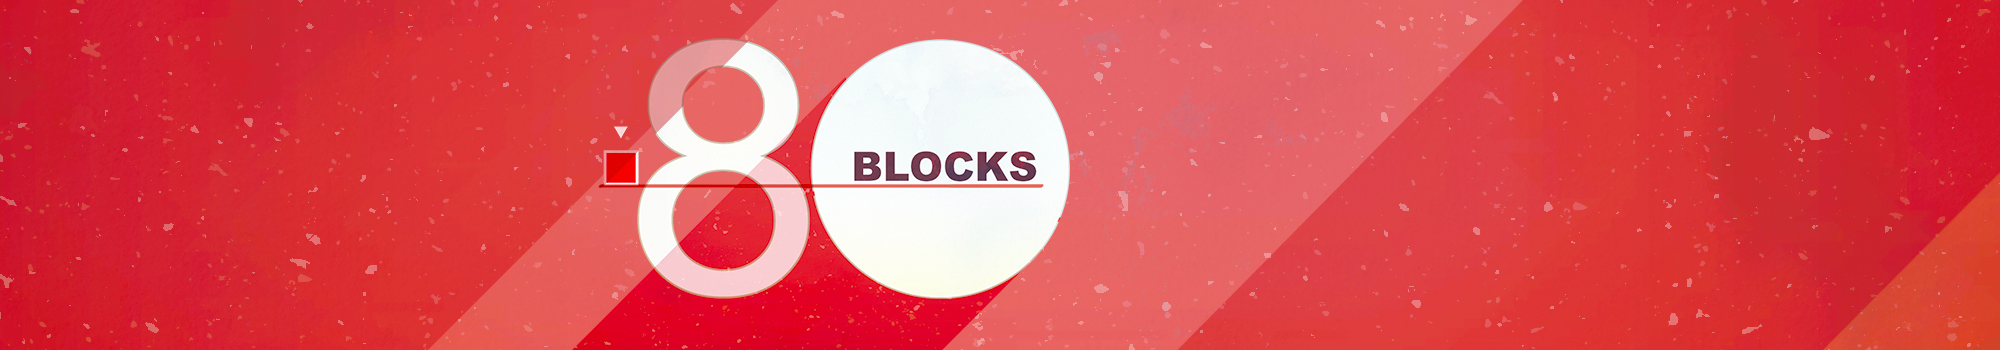 Eighty Blocks